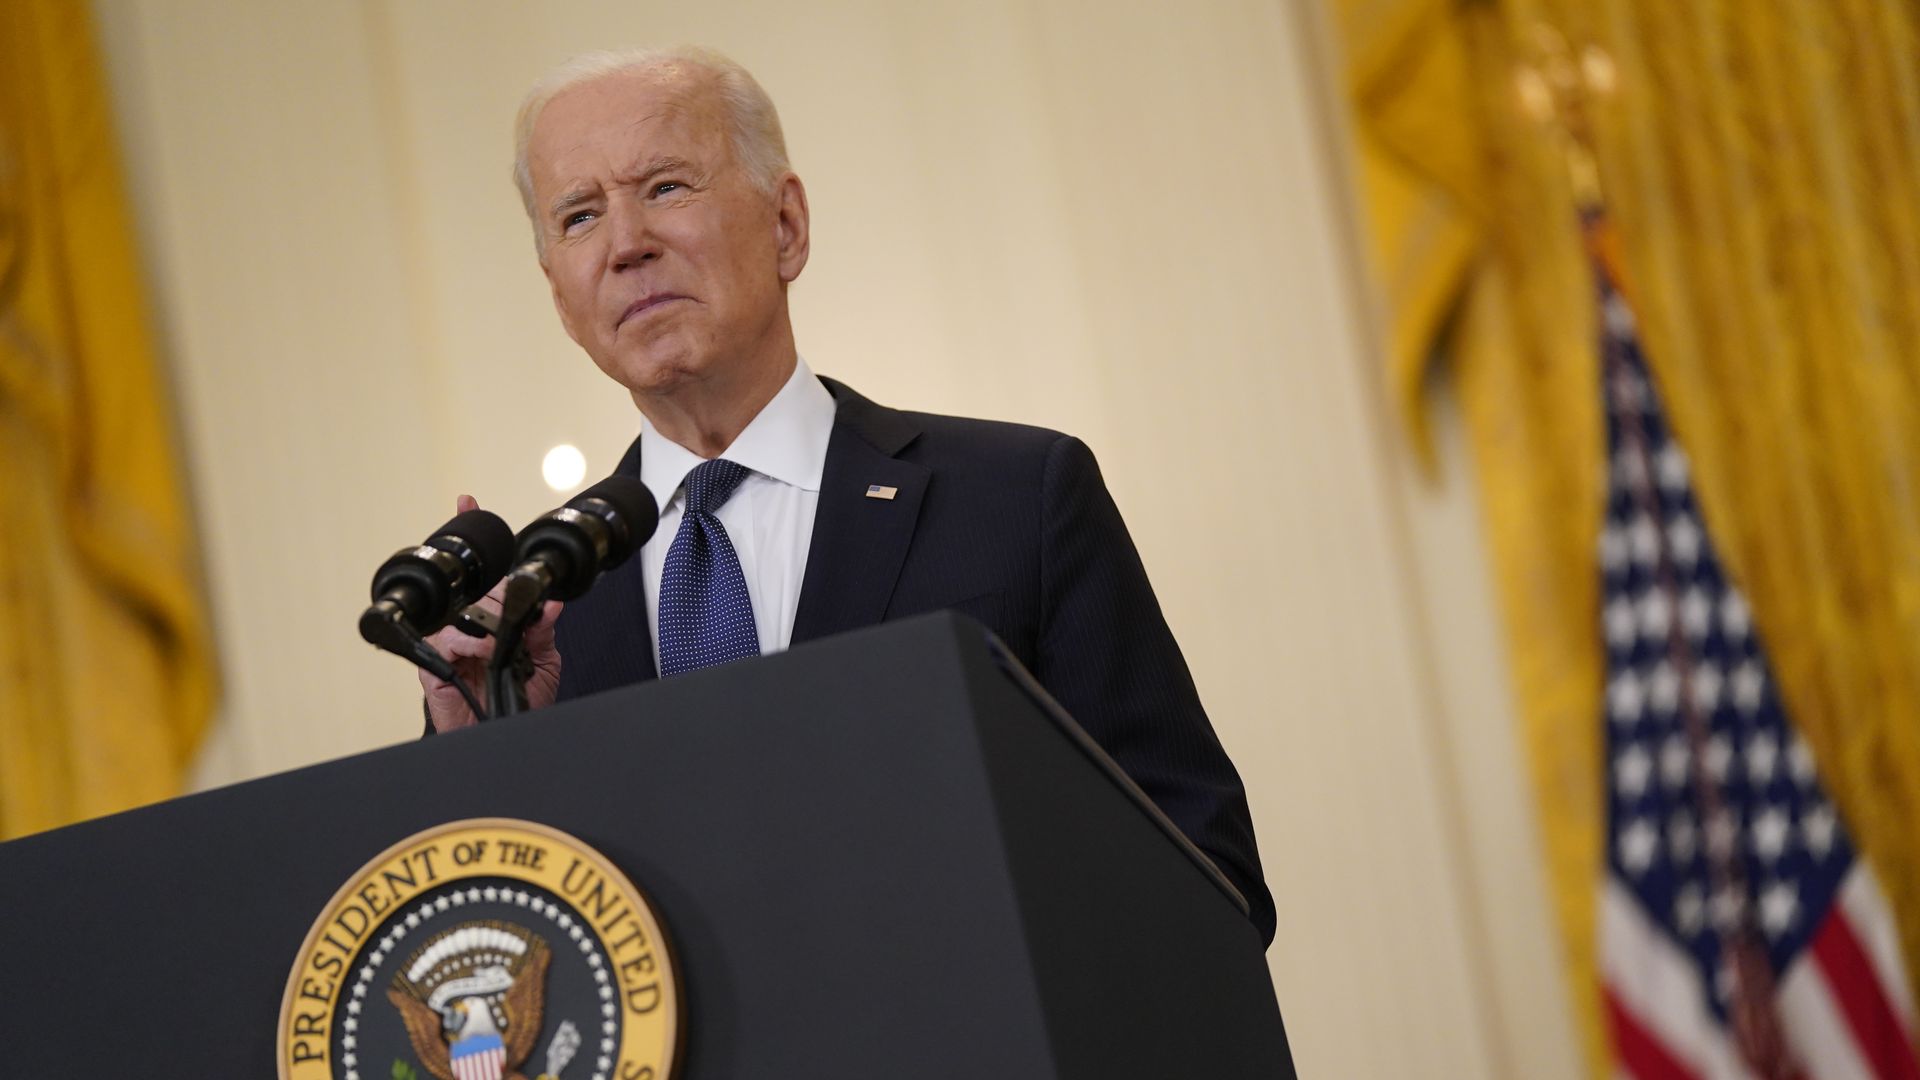 Picture of Joe Biden standing behind a podium